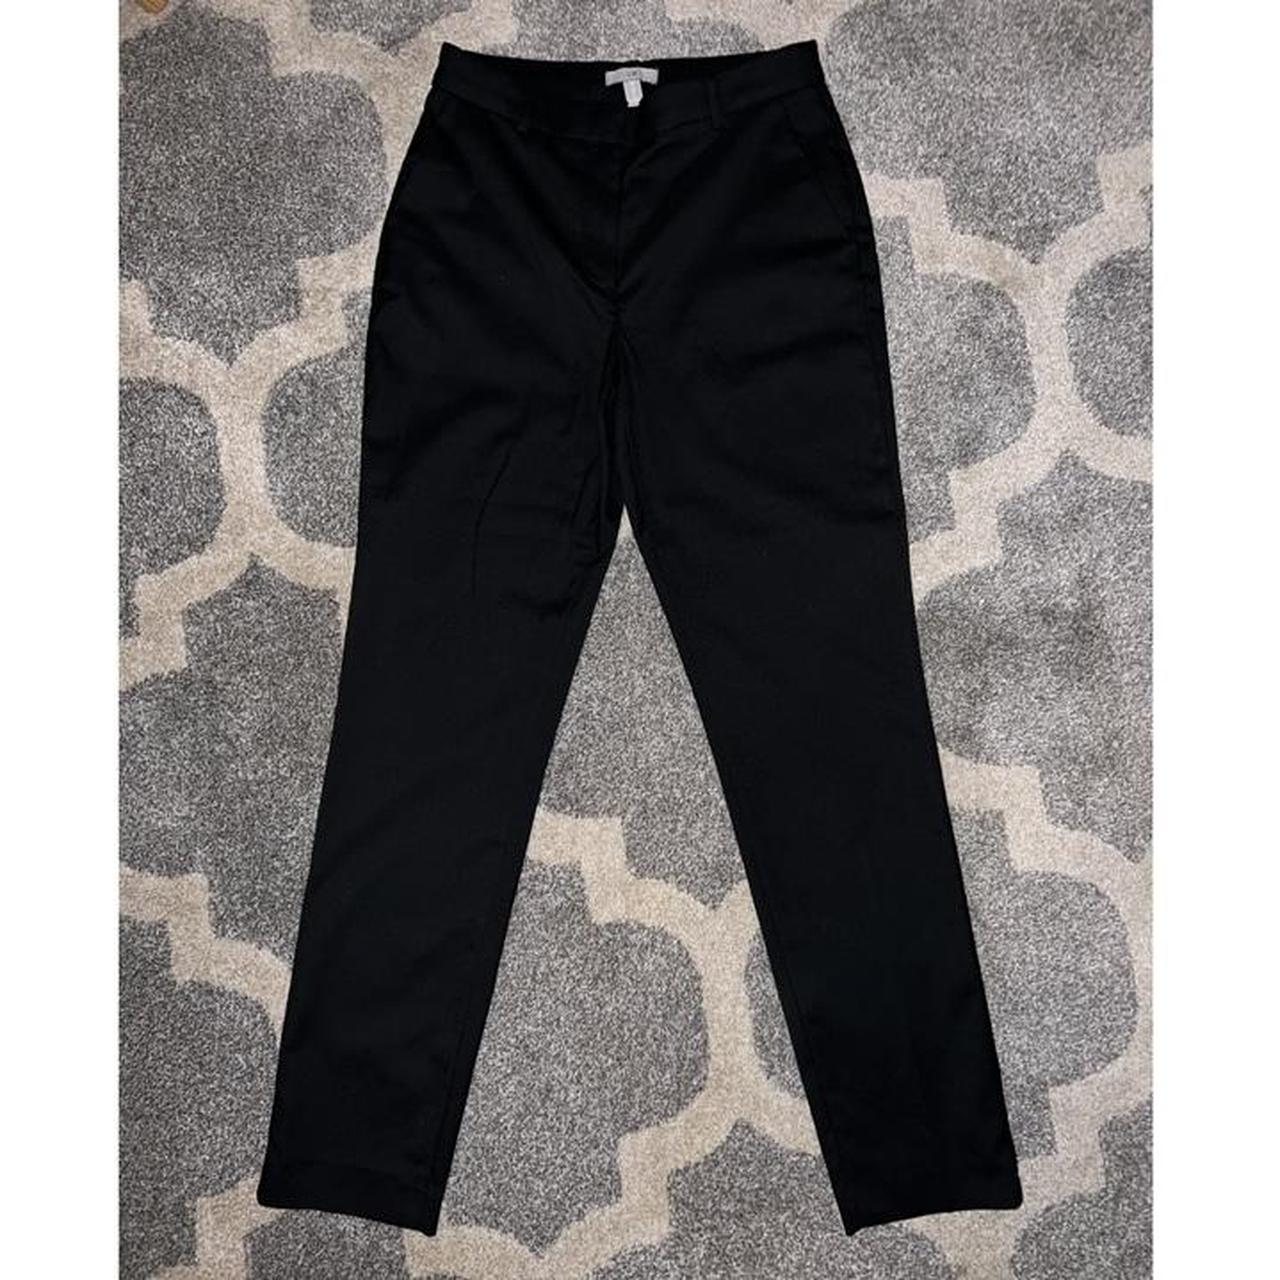 Black slim fit pants for men tailored as formal dress pants | Baron Boutique